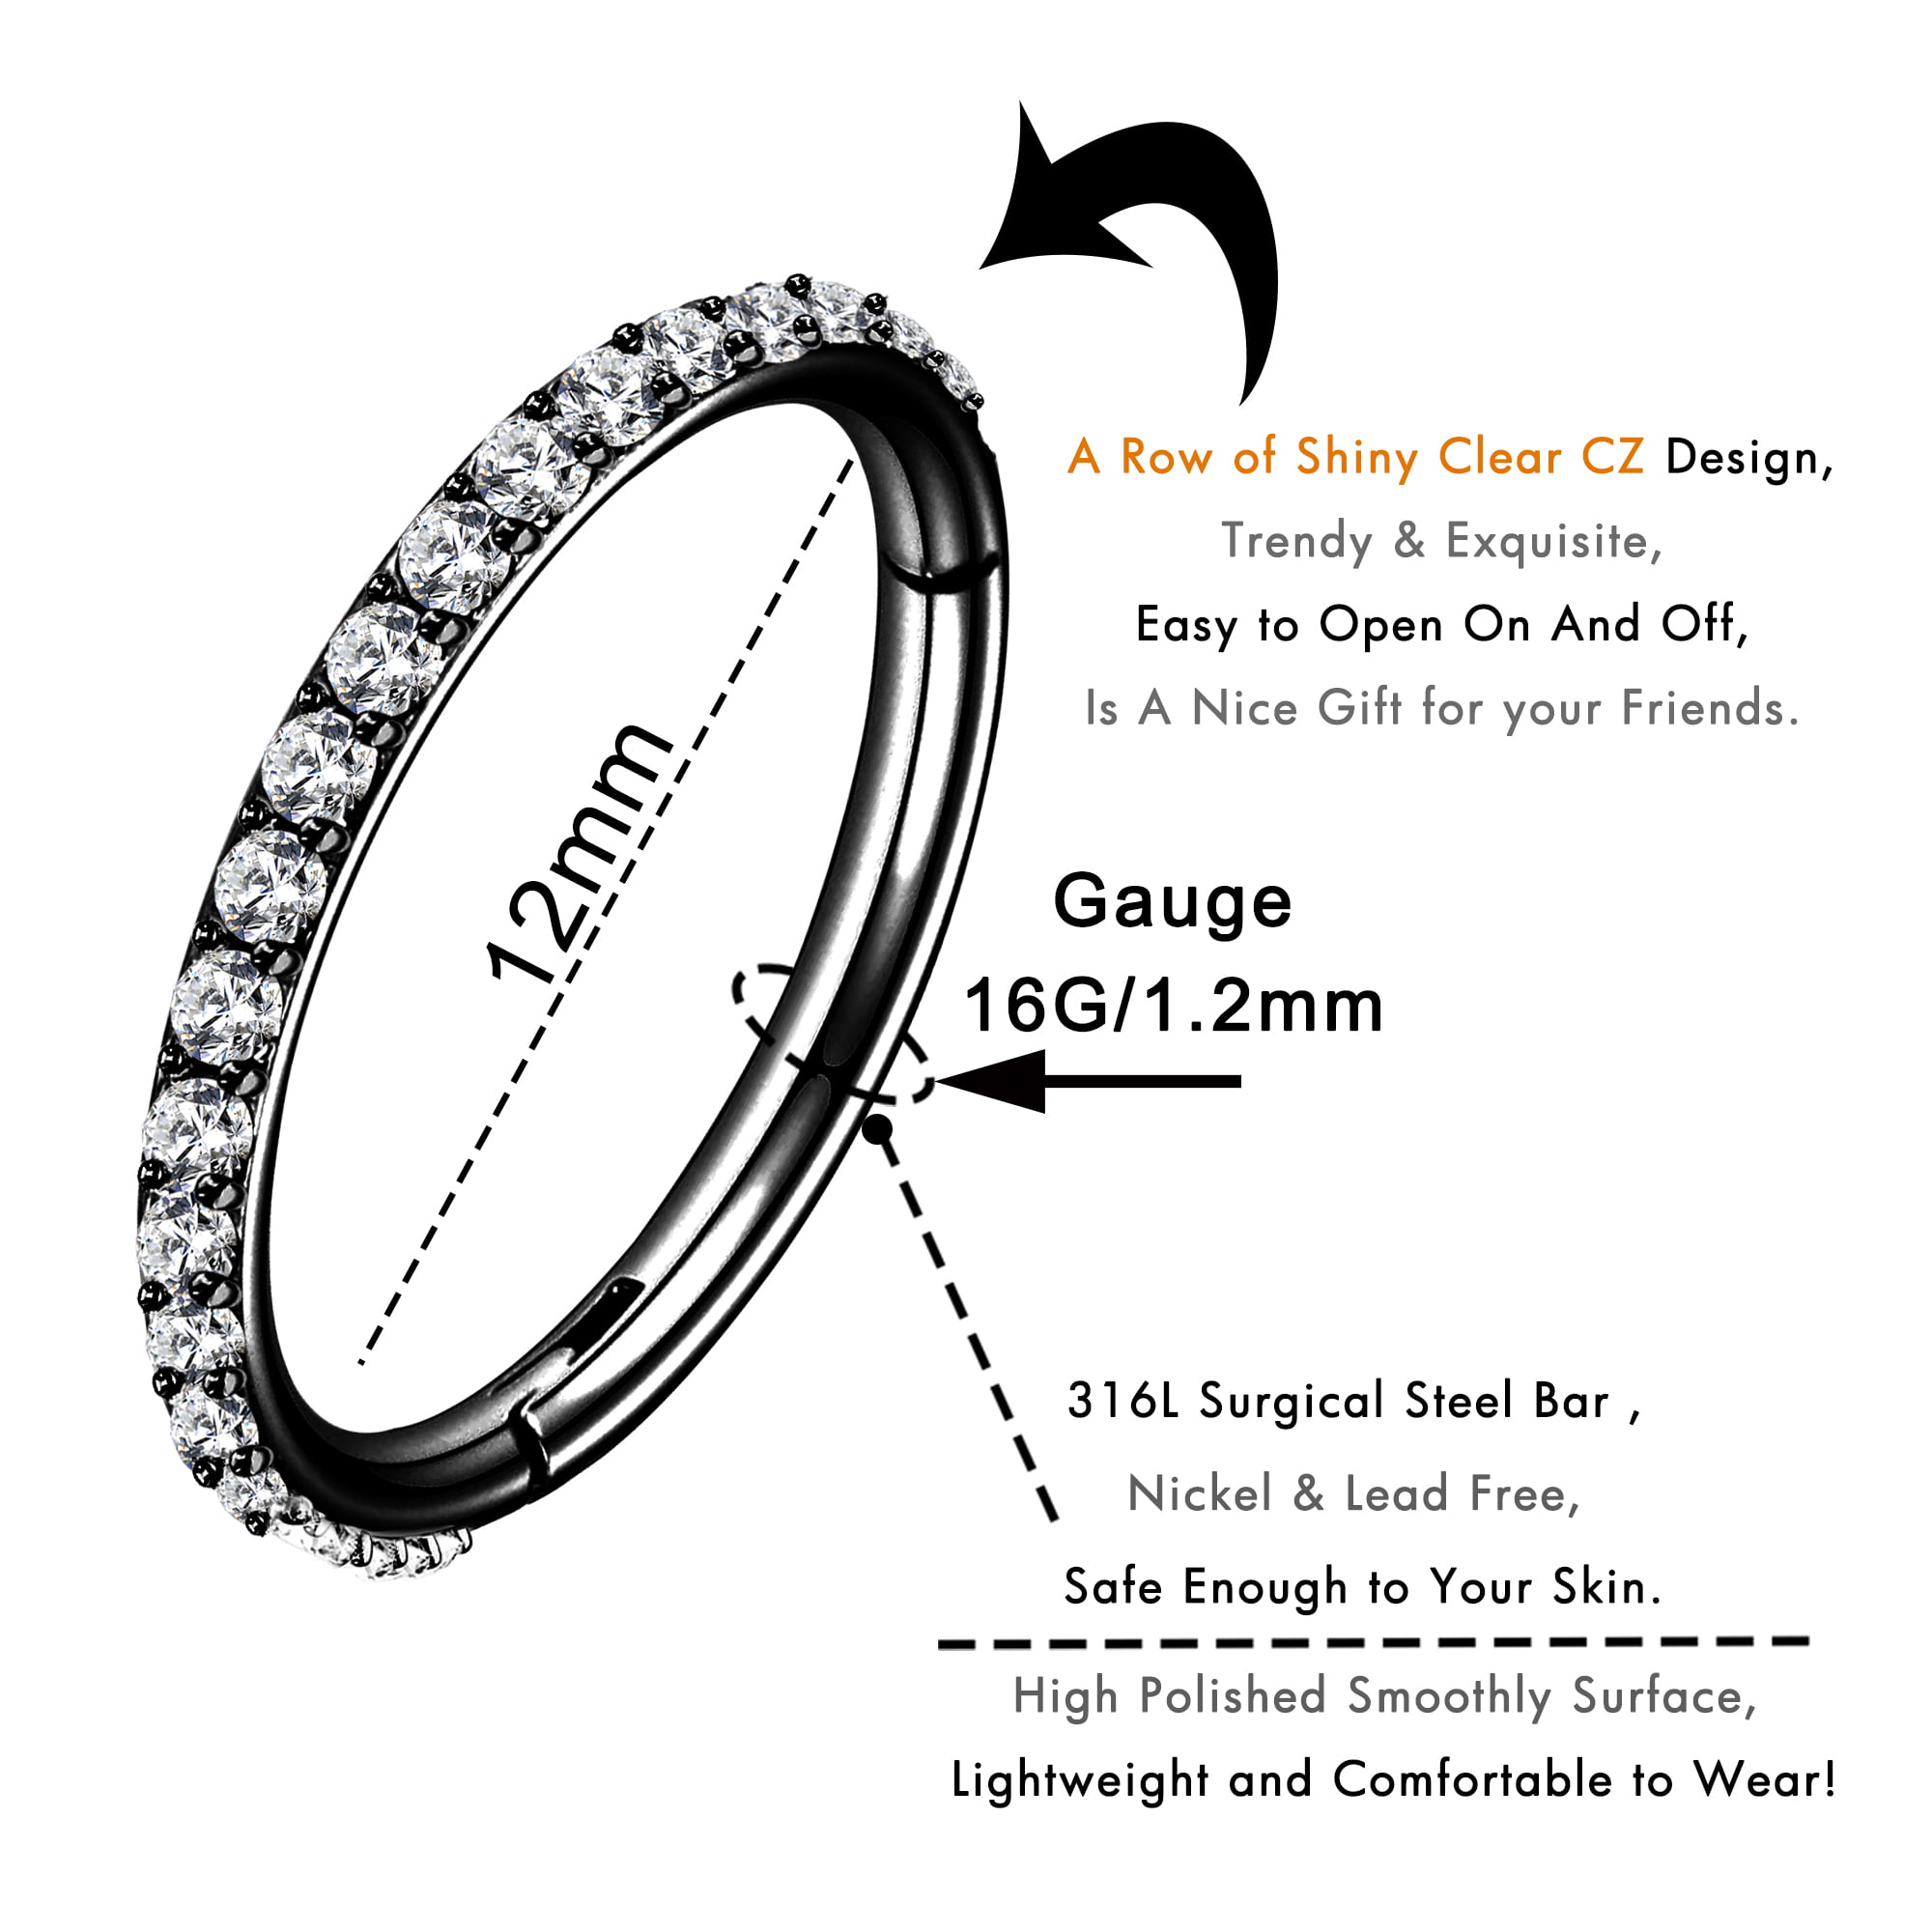  Ubjuliwa 27Pcs 16G Cartilage Earrings Stud Hoop for Women  Stainless Steel Forward Helix Piercing Tragus Earrings Conch Piercing  Jewelry Black : Clothing, Shoes & Jewelry